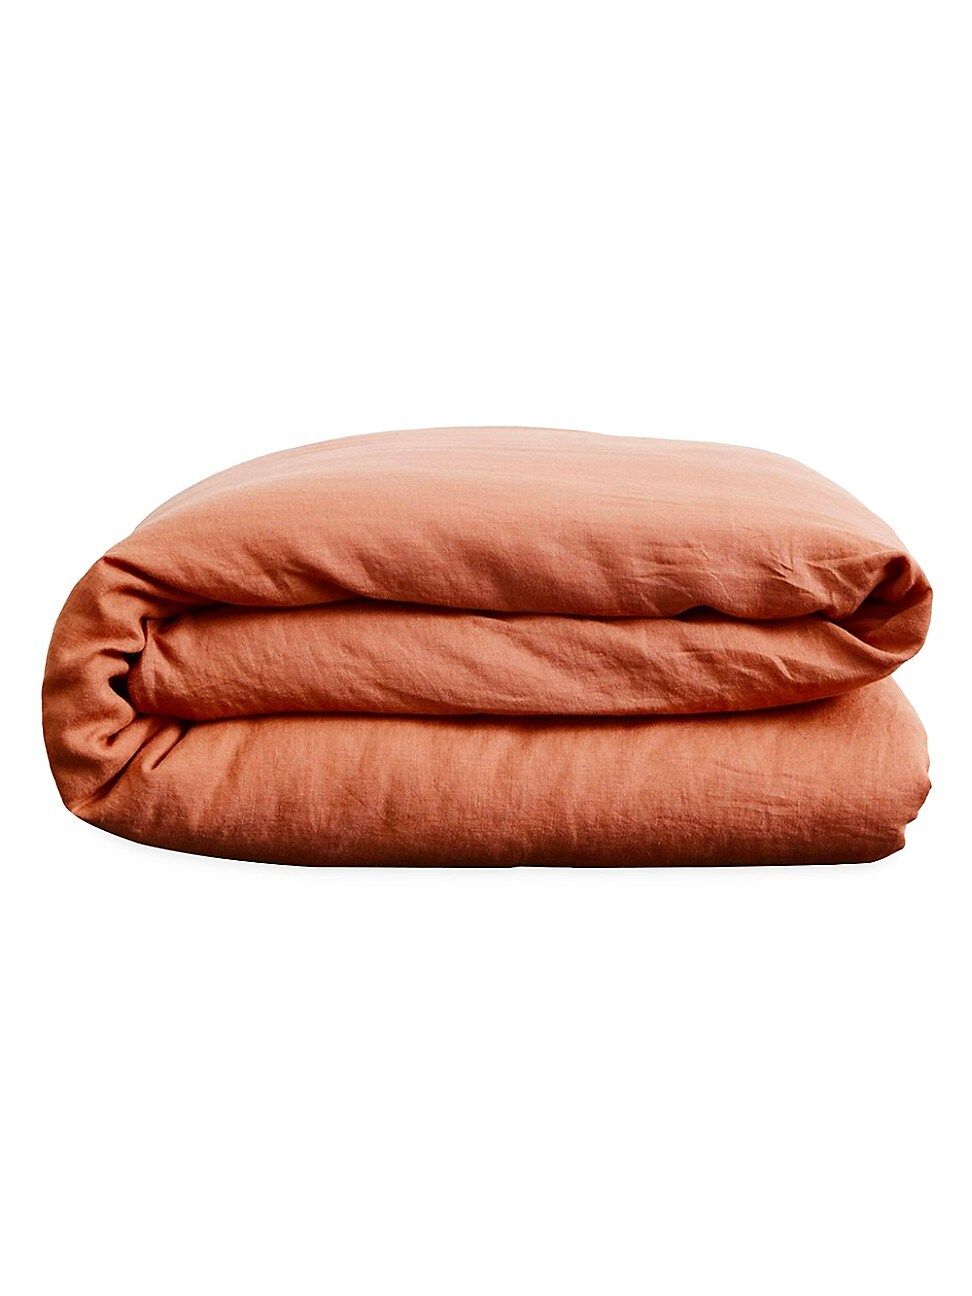 100% French Flax Linen Duvet Cover - Hazelnut - Size Twin - Hazelnut - Size Twin | Saks Fifth Avenue